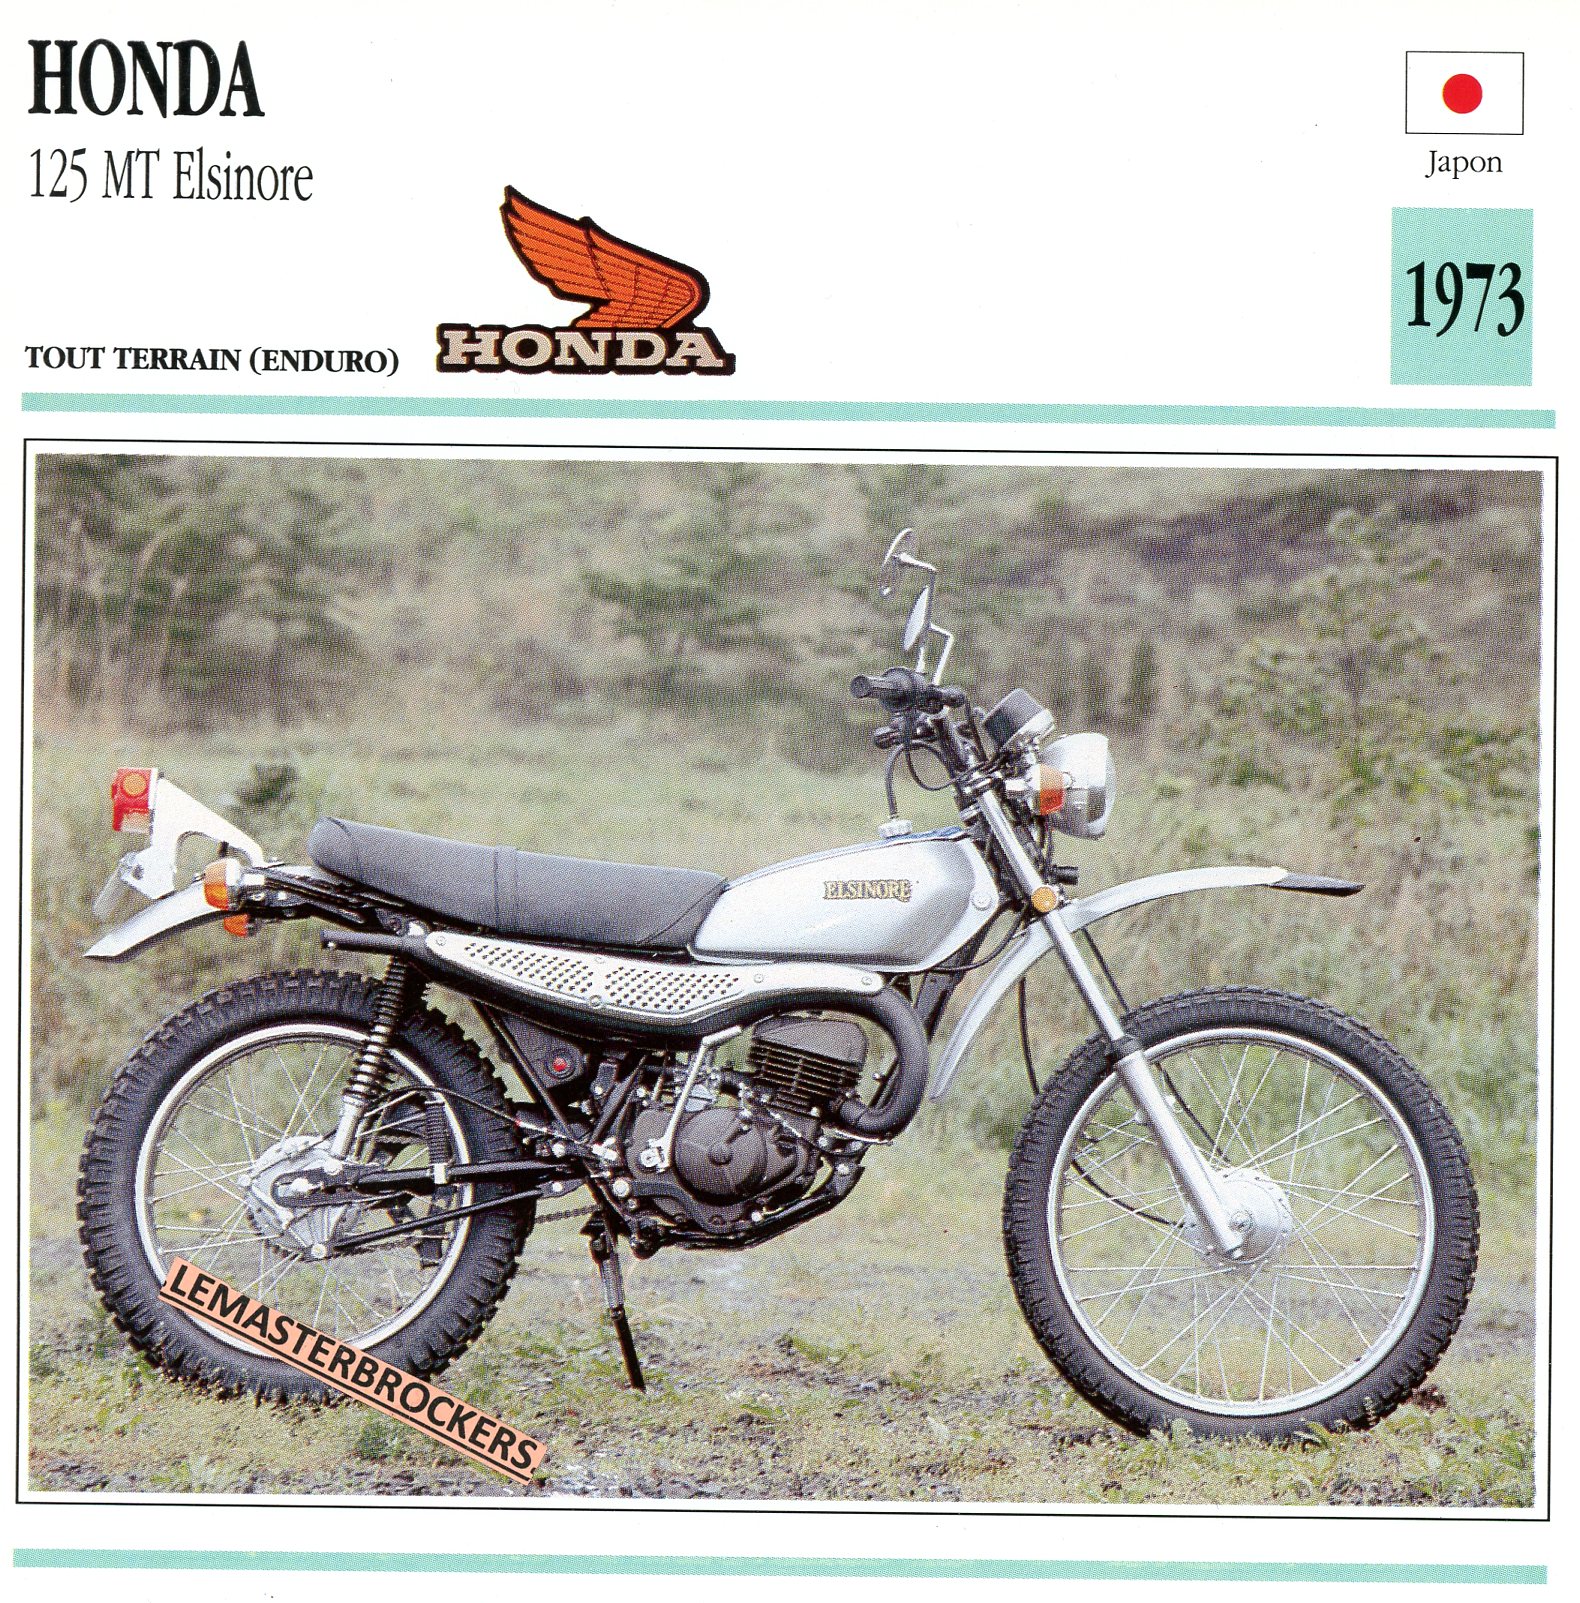 FICHE-MOTO-HONDA-125-MT-ELSINORE-1973-LEMASTERBROCKERS-CARS-MOTORCYCLE